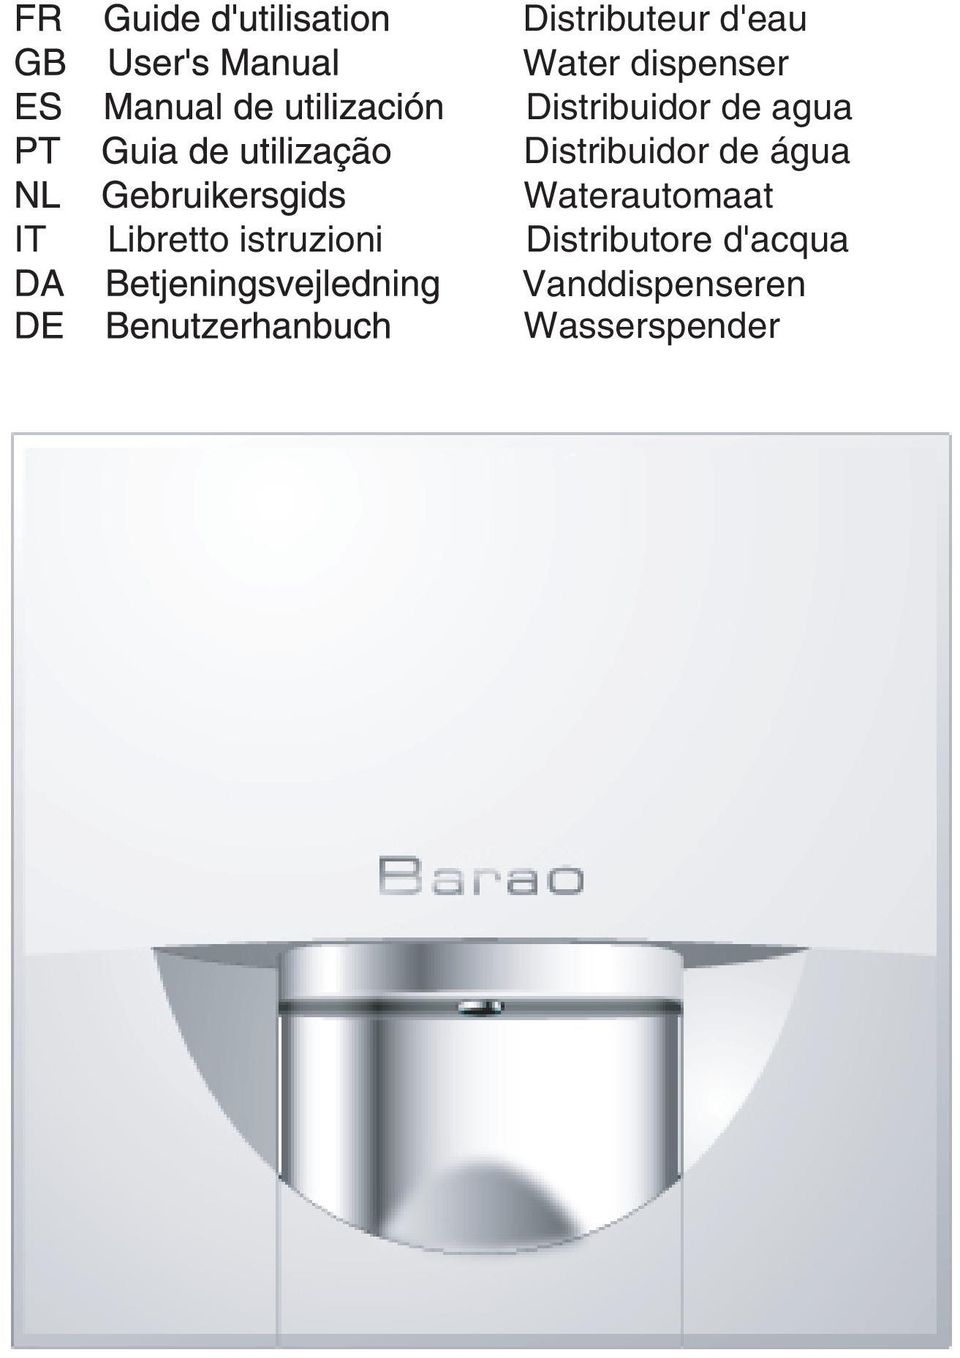 água Waterautomaat IT Libretto